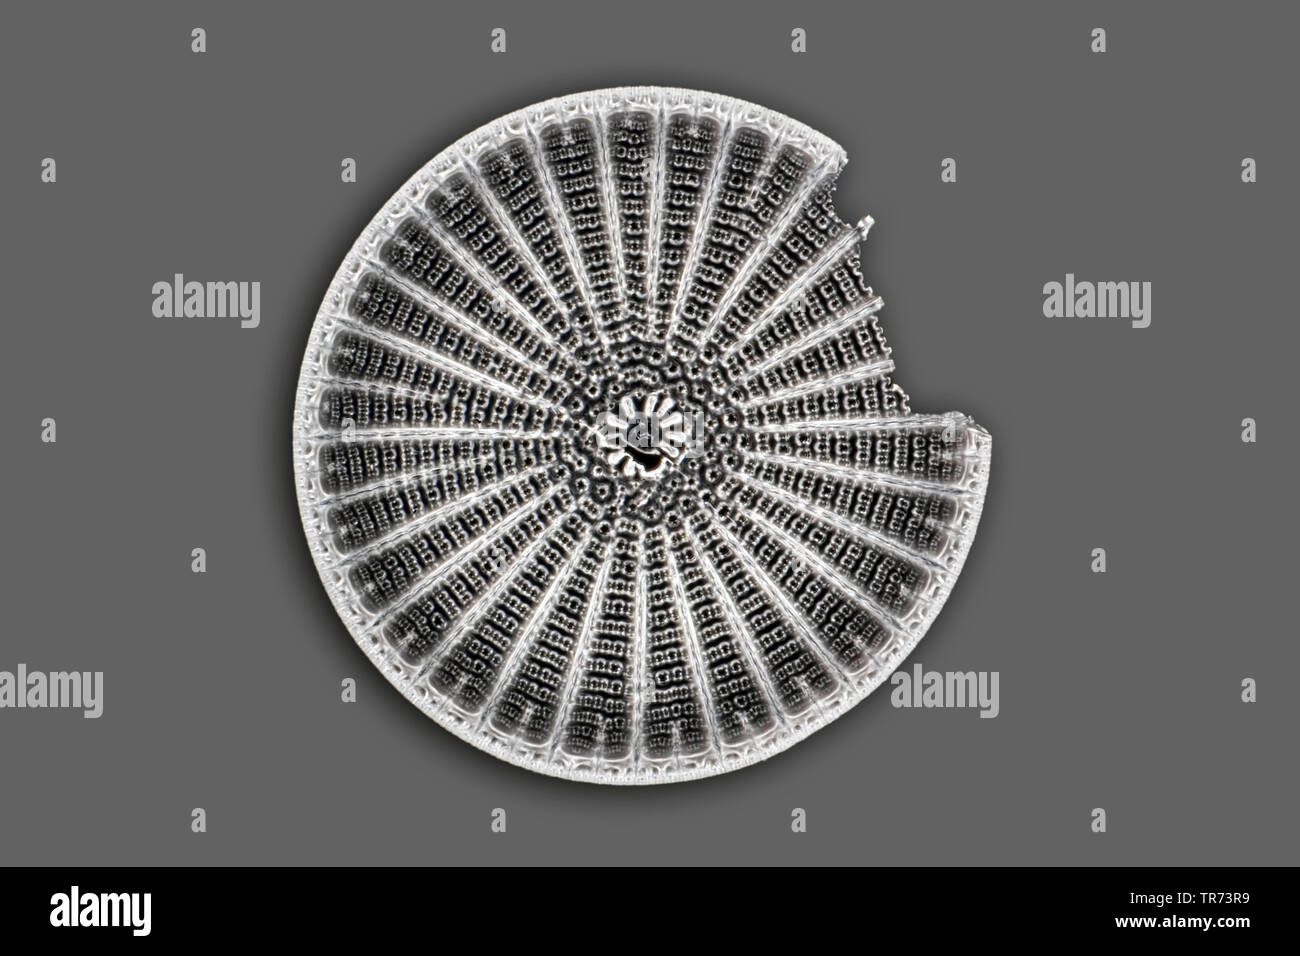 diatom (Diatomeae), fossil diatoms from Oamaru in darkfield, x 120 Stock Photo